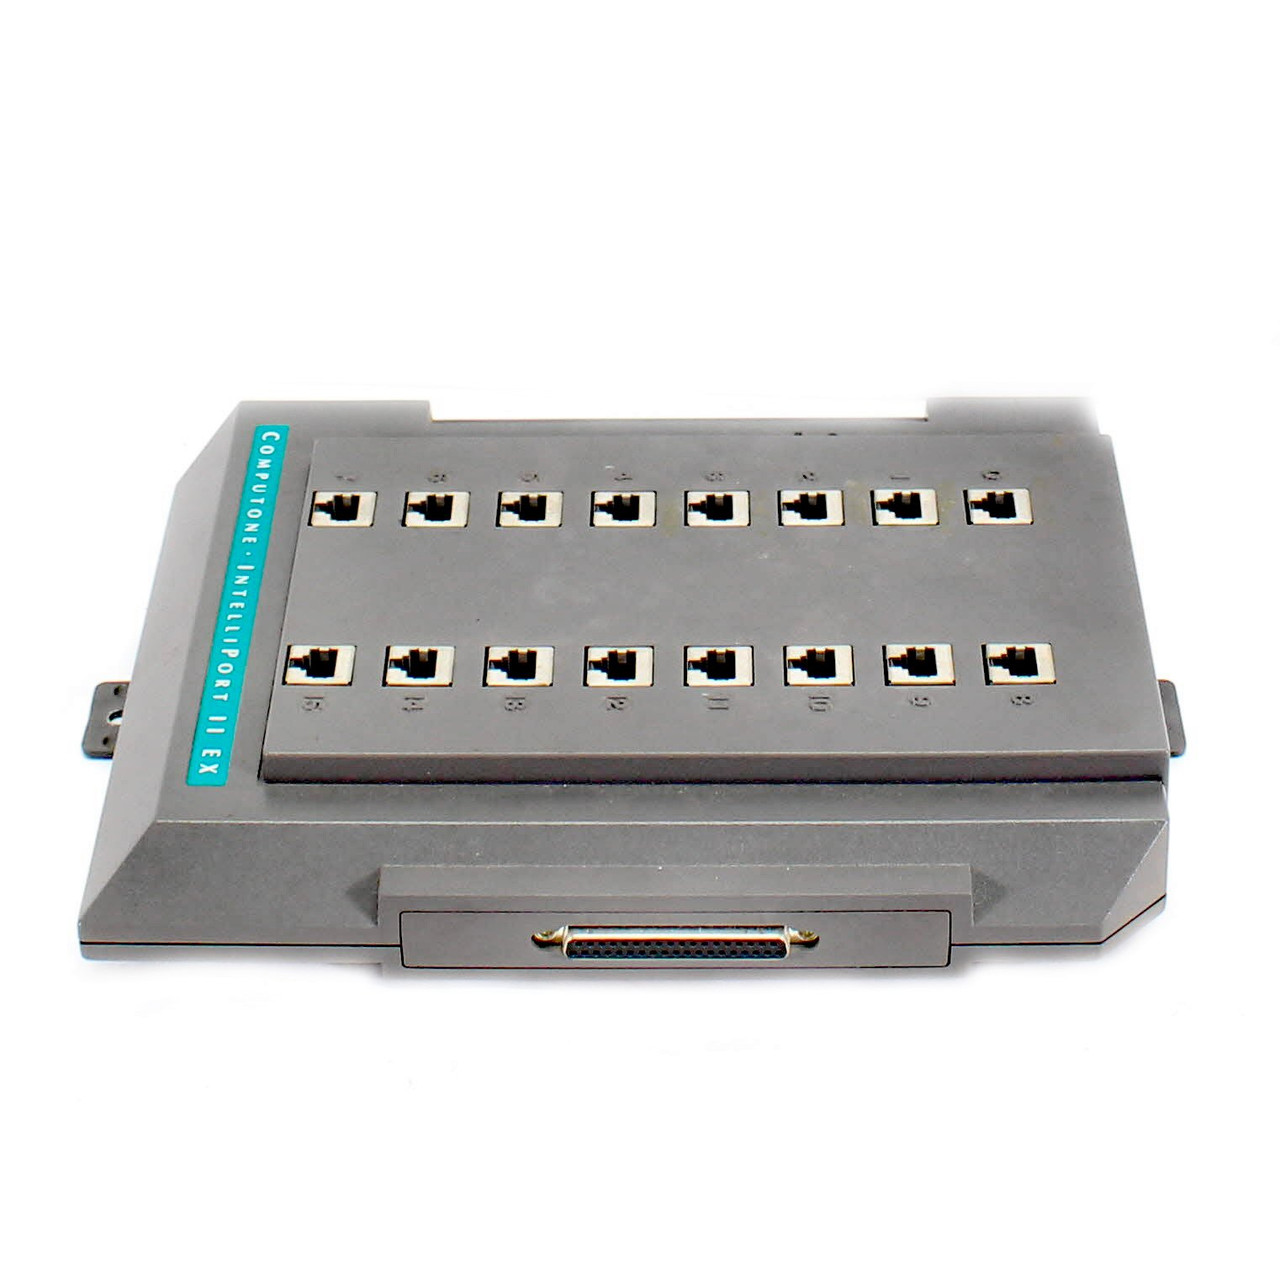 Computone New Slimline IntelliPort II EX 16 Port RJ45 3-06205-B